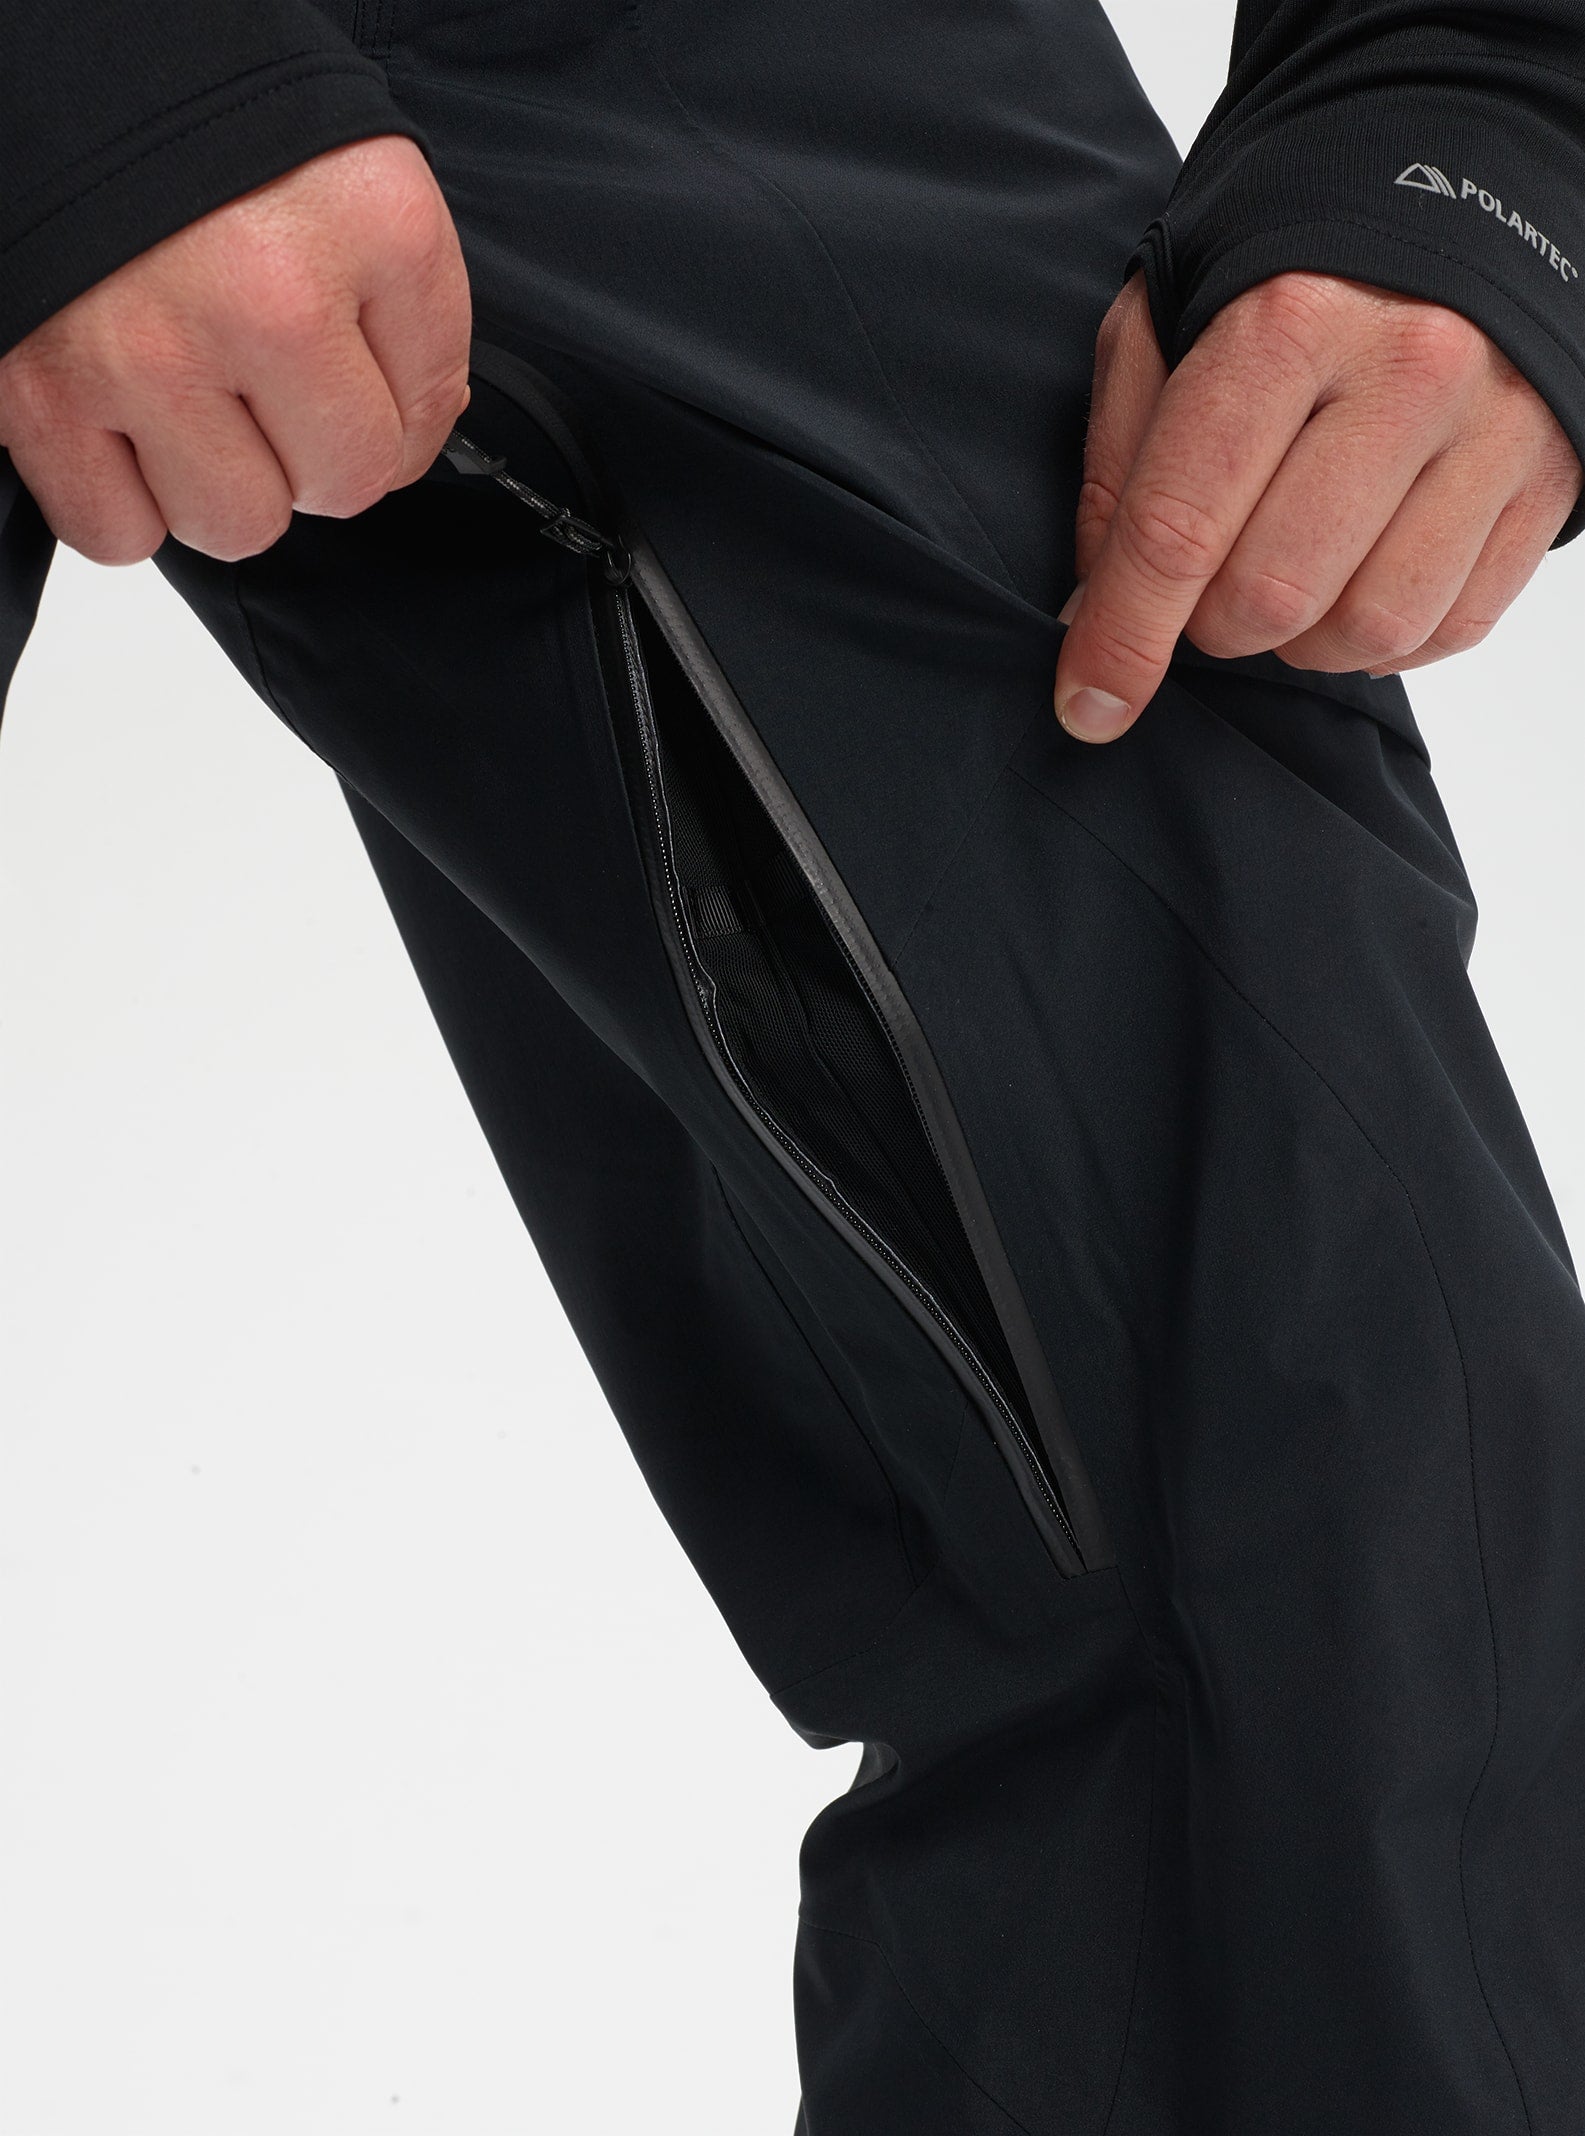 Burton Men's Burton [ak] Hover GORE-TEX PRO 3L Pants True Black